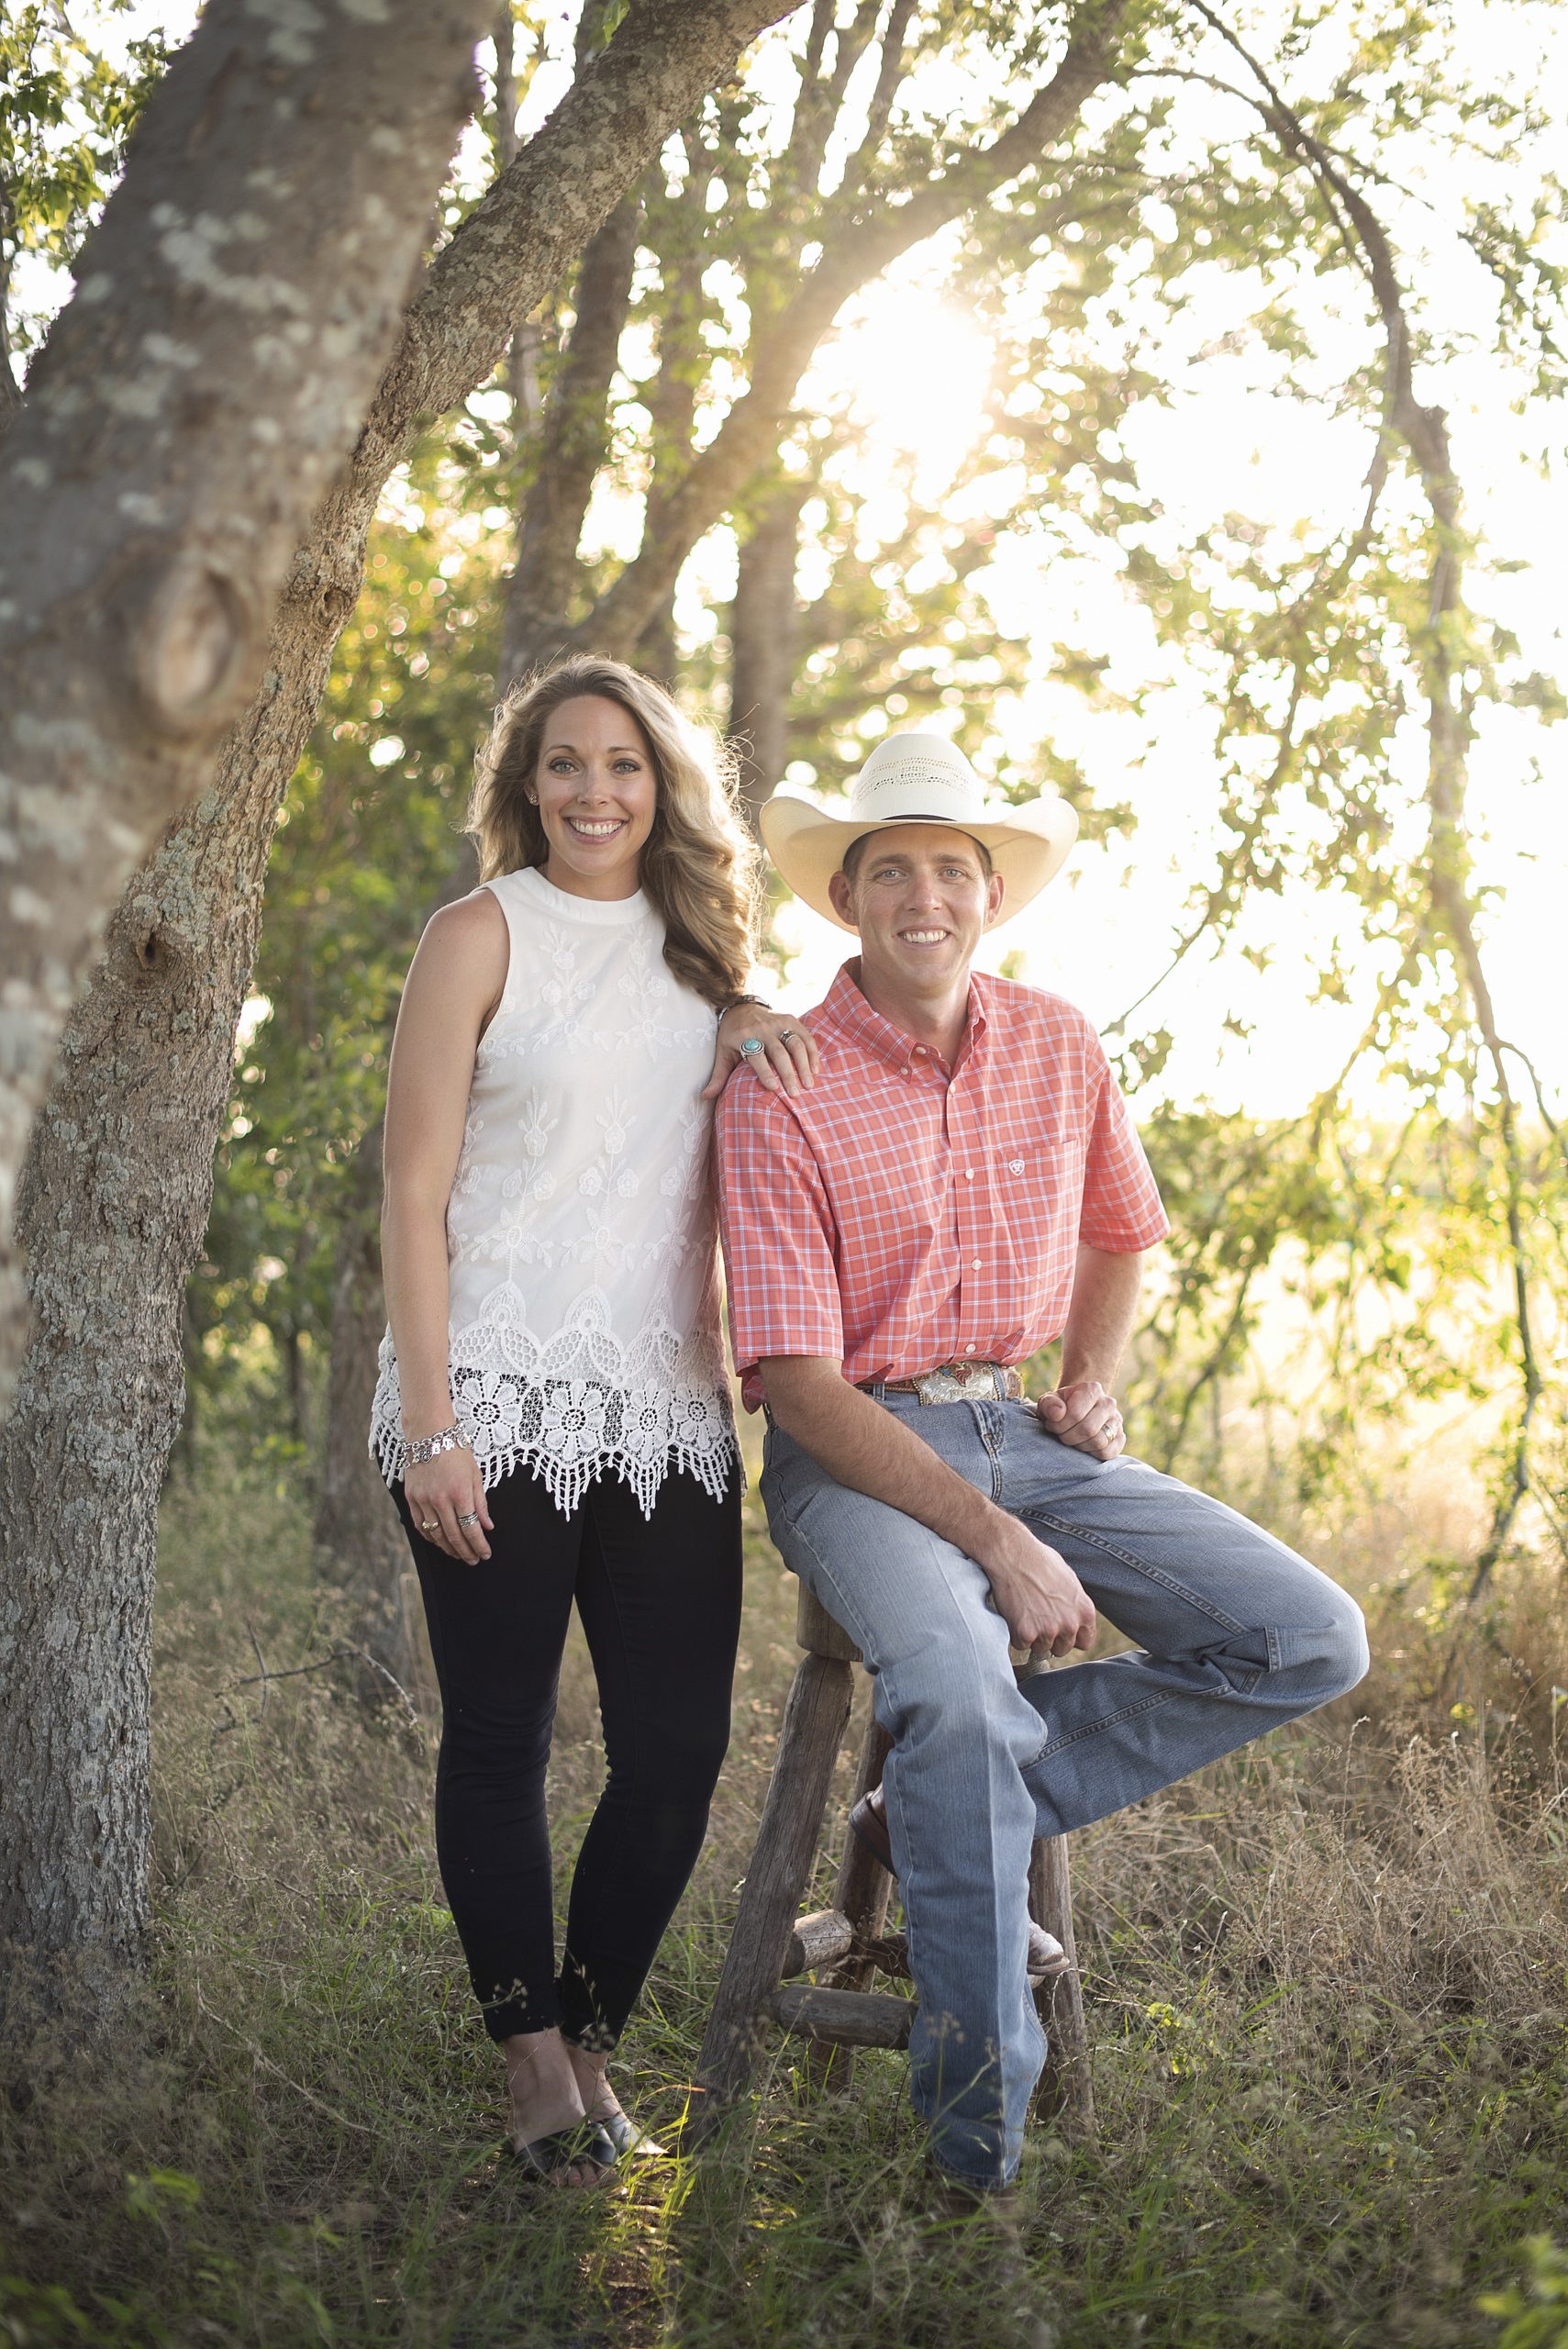 Phillip and Lauren Mynarcik CenTex Home & Ranch Real estate Central Texas Realtors